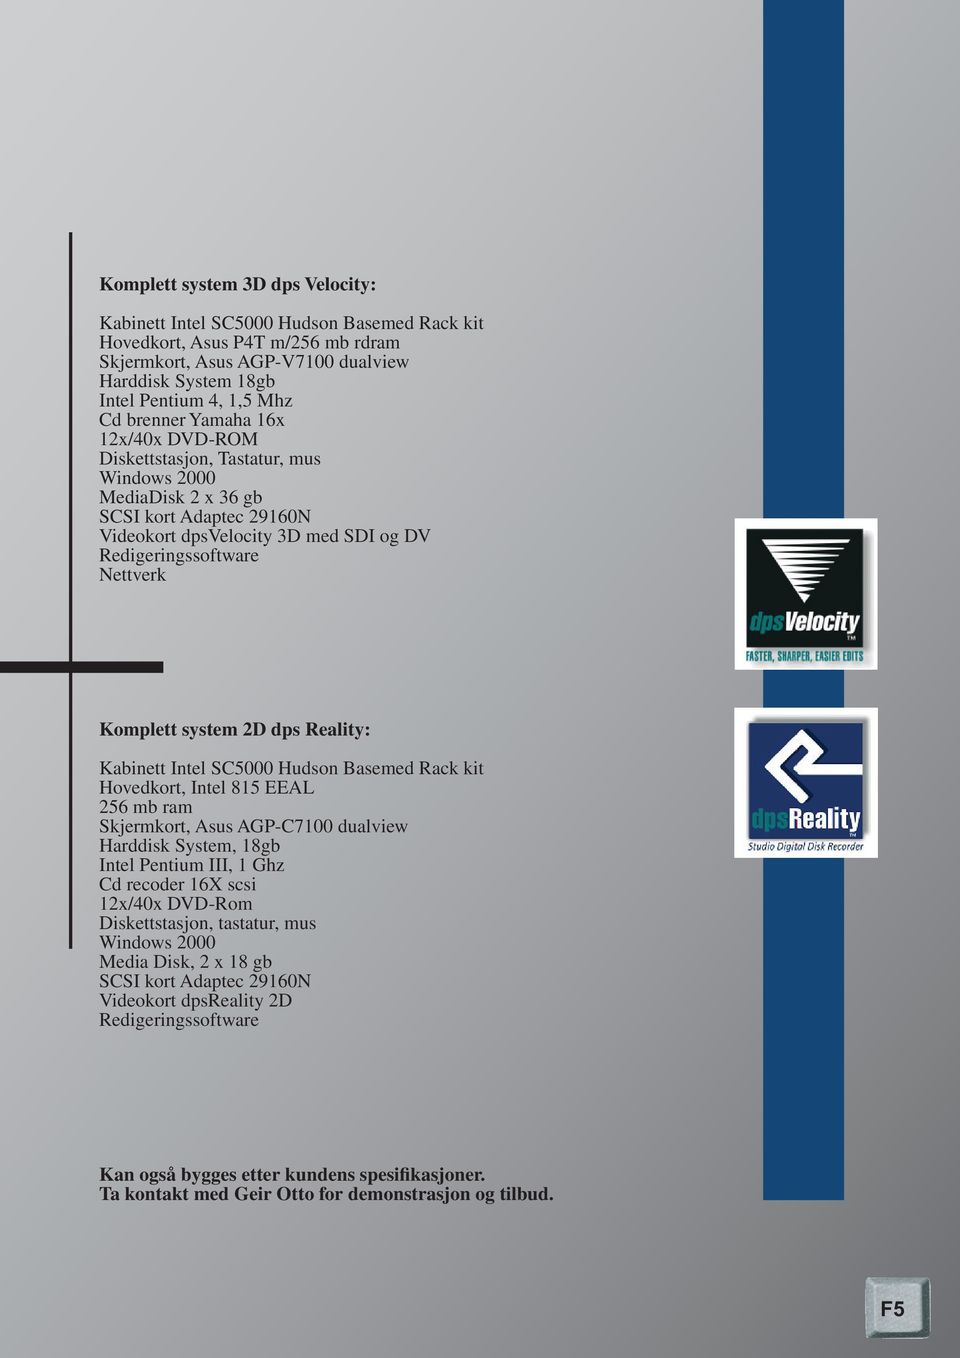 system 2D dps Reality: Kabinett Intel SC5000 Hudson Basemed Rack kit Hovedkort, Intel 815 EEAL 256 mb ram Skjermkort, Asus AGP-C7100 dualview Harddisk System, 18gb Intel Pentium III, 1 Ghz Cd recoder